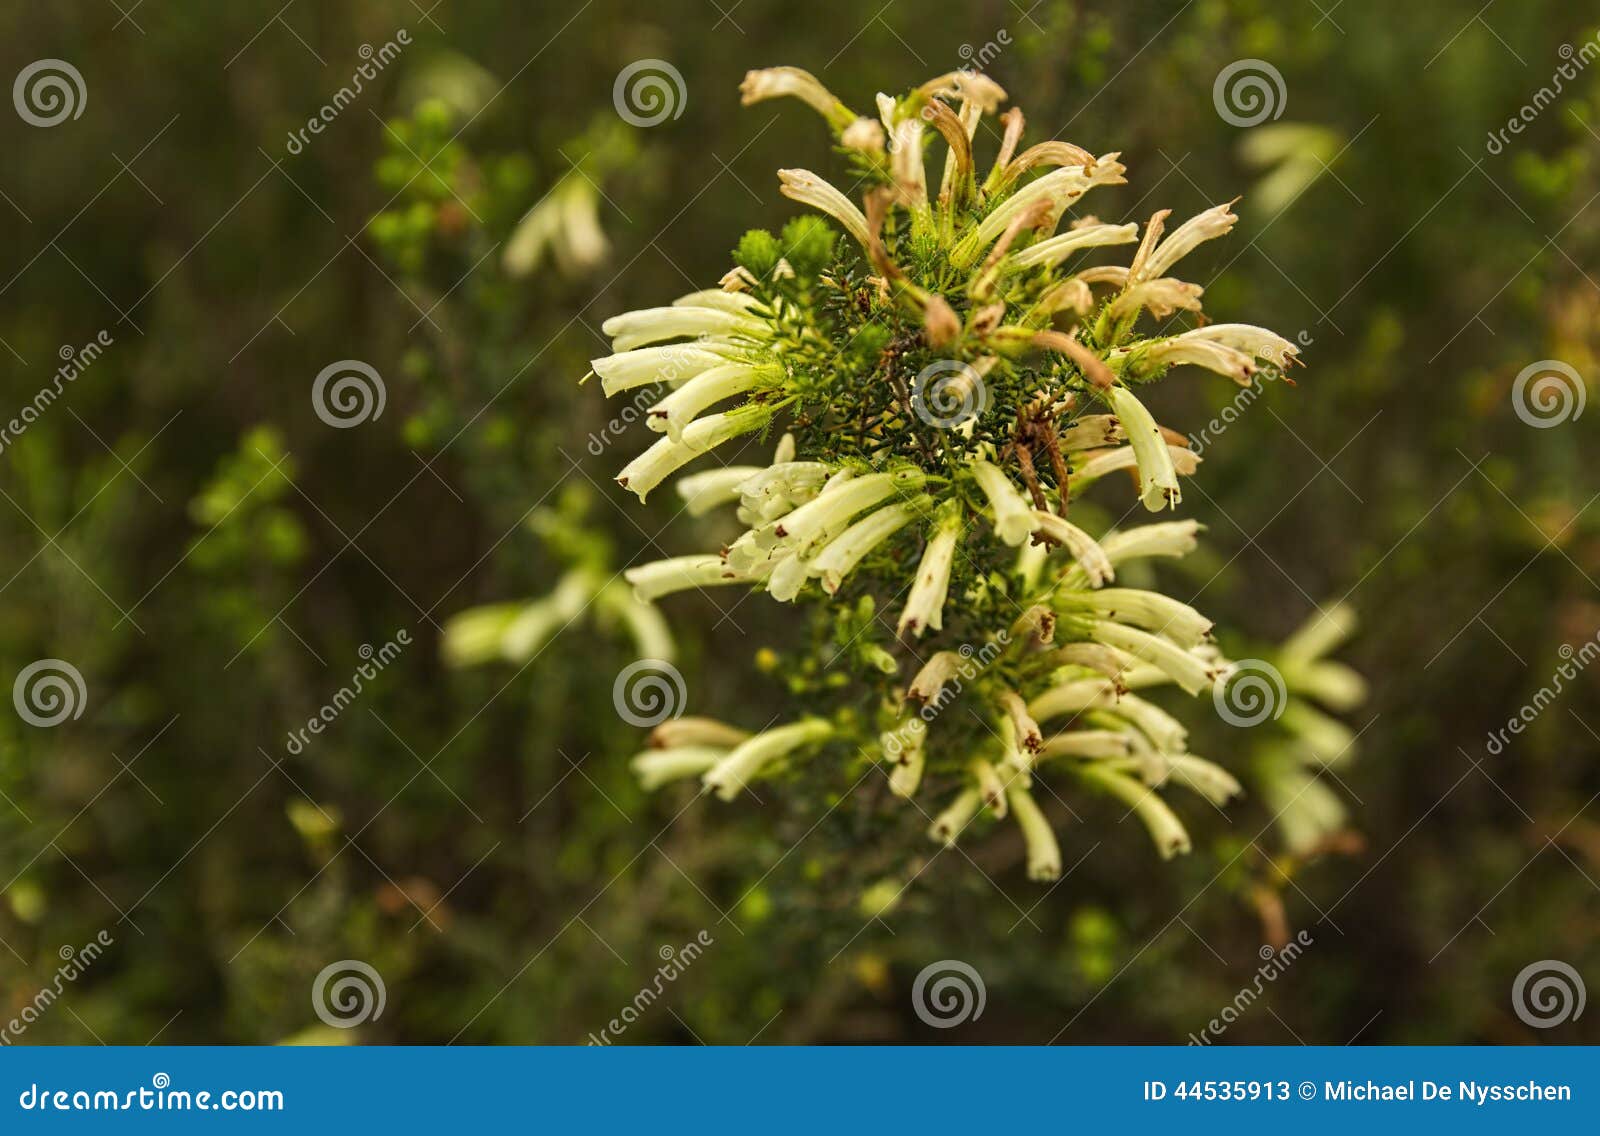 cuphea ignea, cigarette bush, firecracker plant fynbos